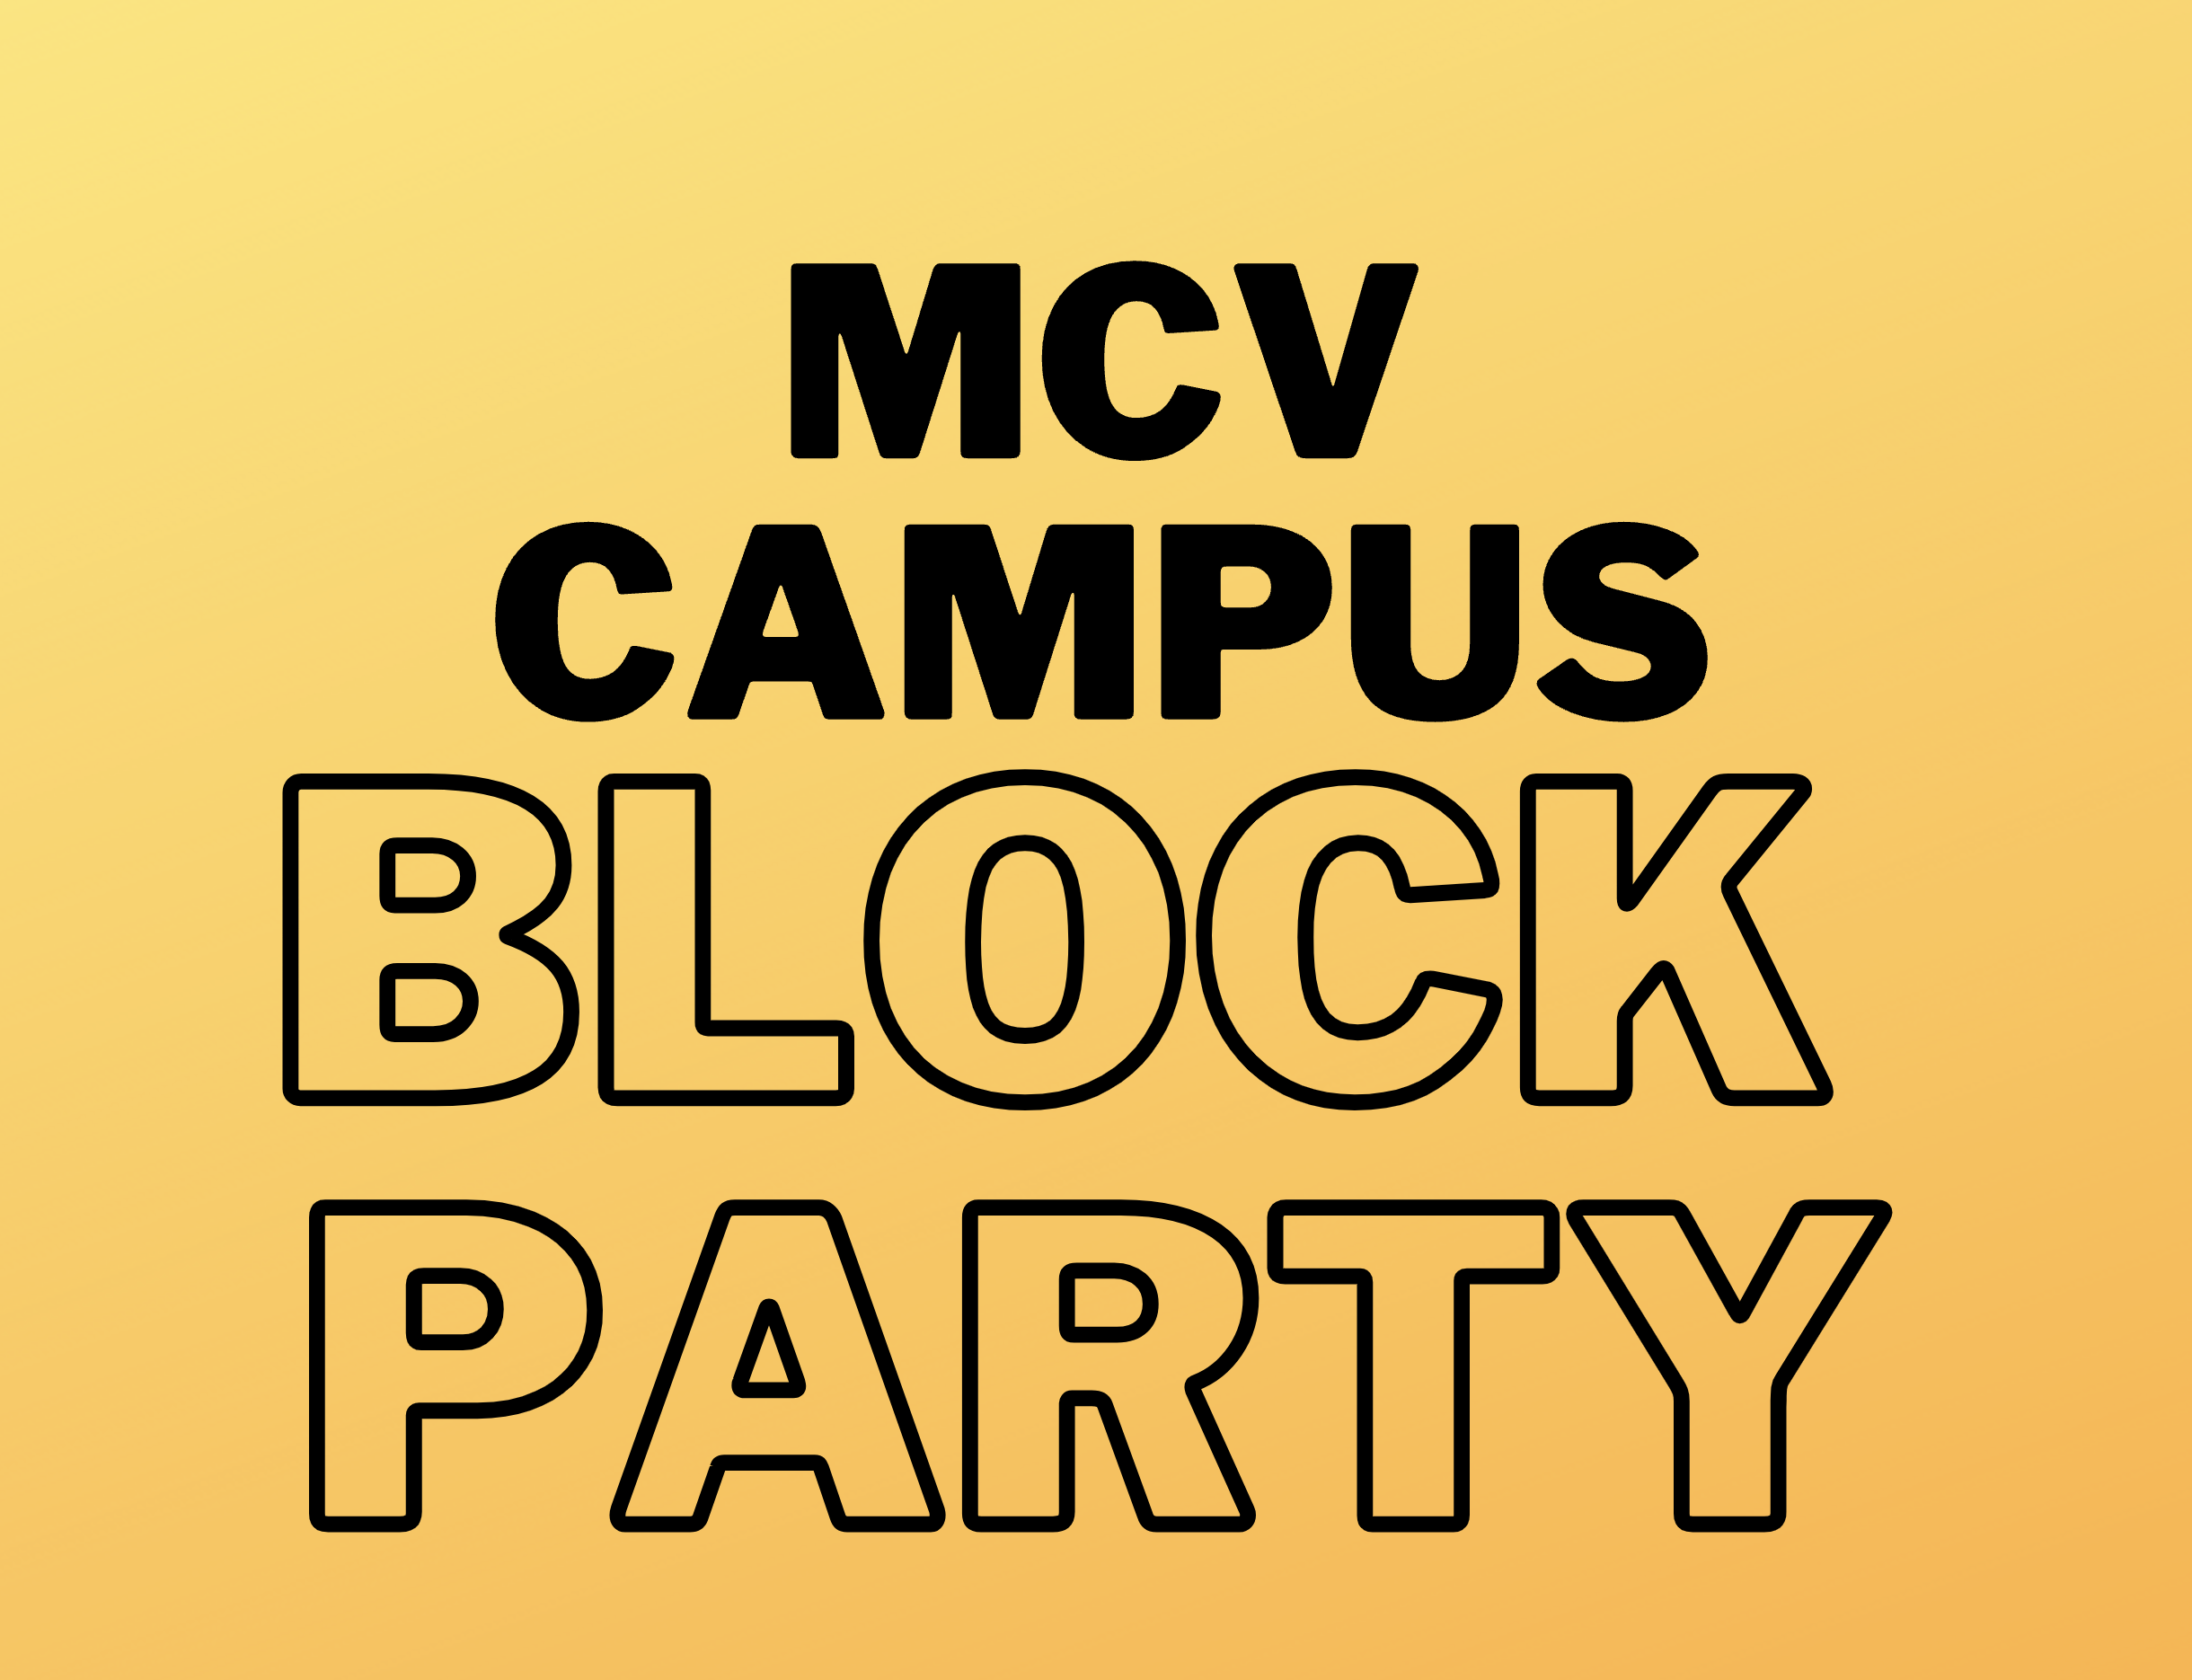 MCV Campus Block Party